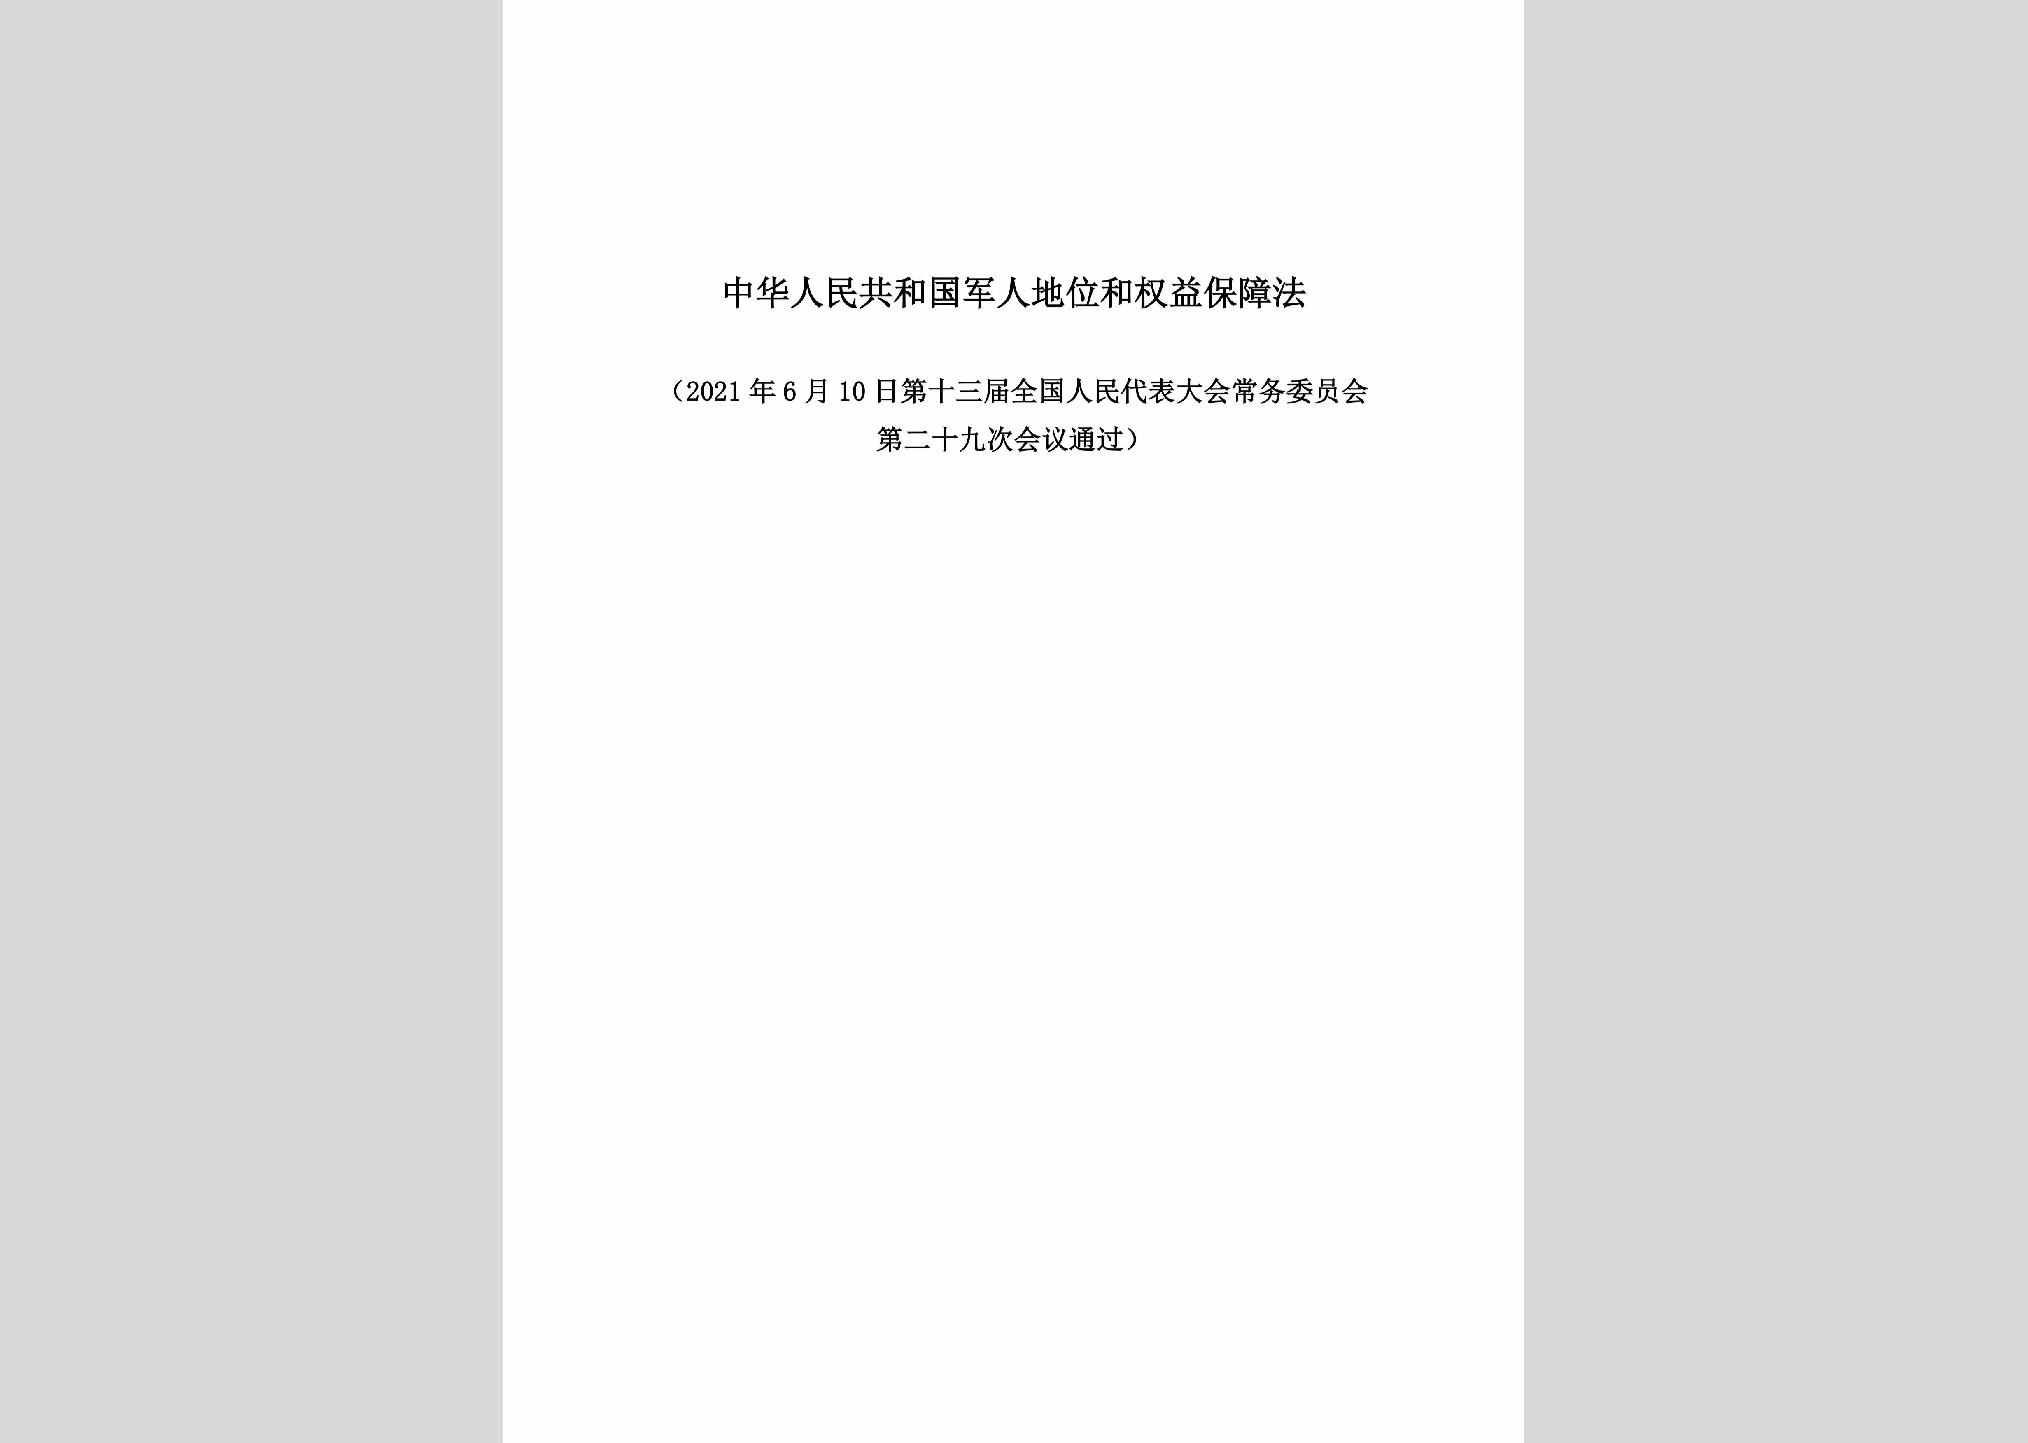 JRDWQYBZ：中华人民共和国军人地位和权益保障法